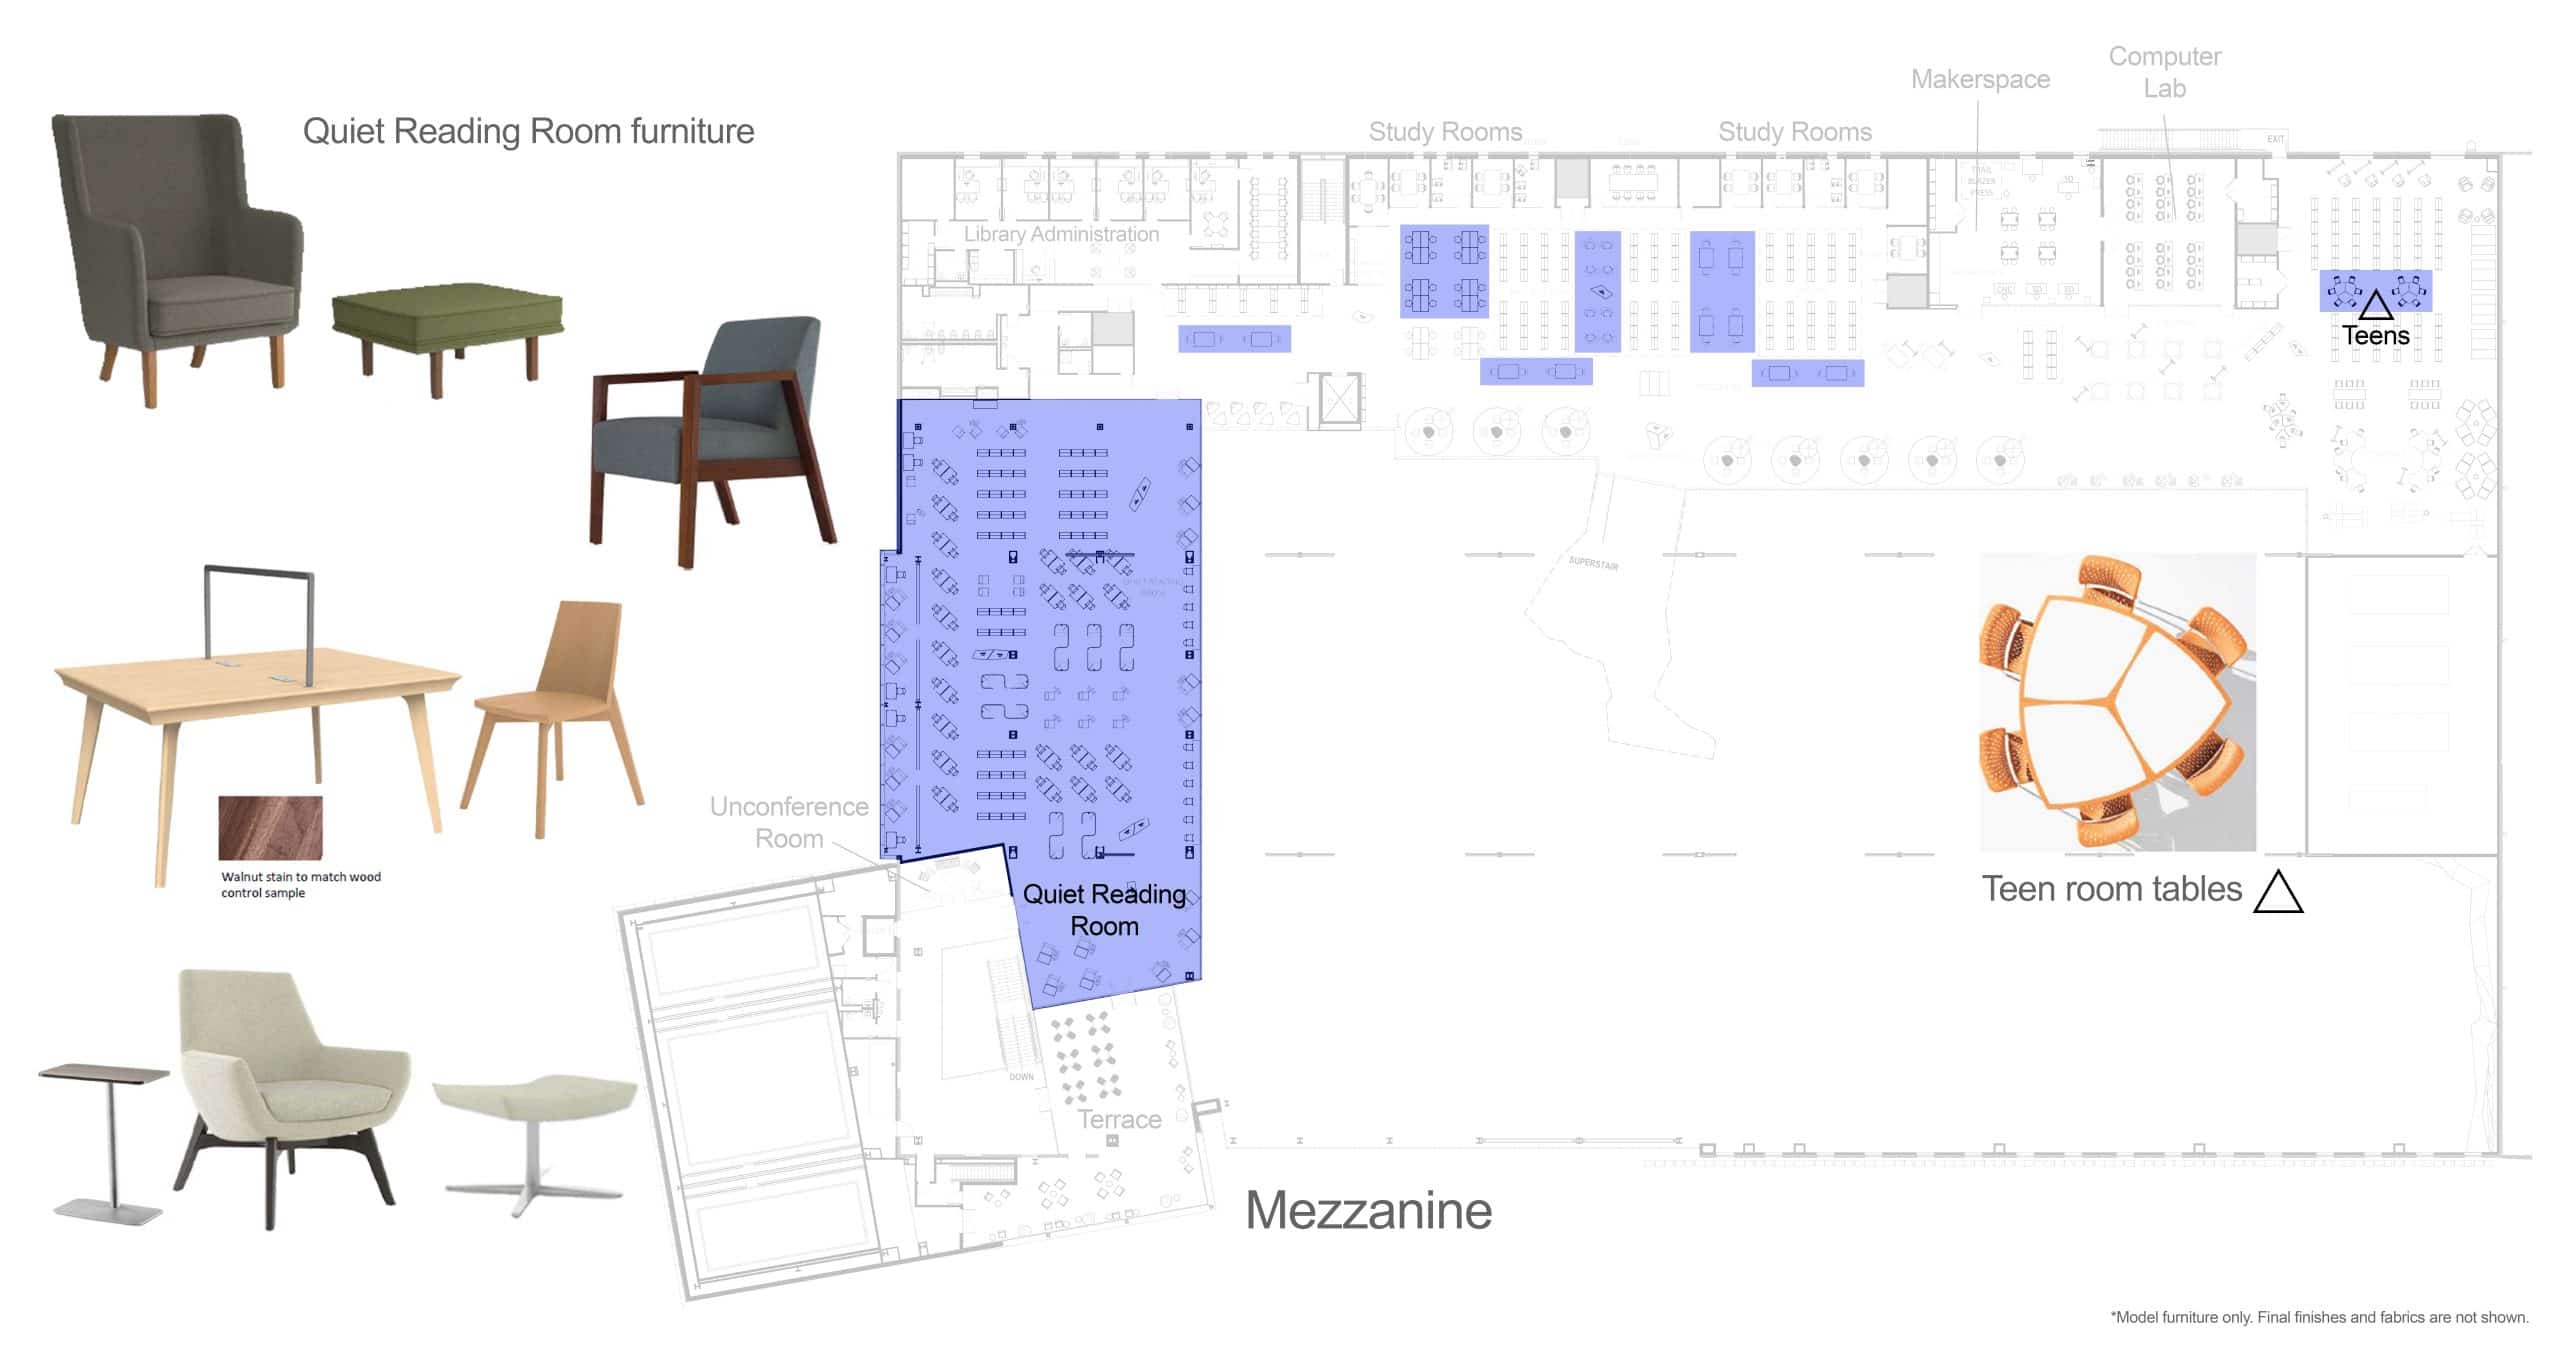 Taking Care of Business2 - mezzanine floor plan